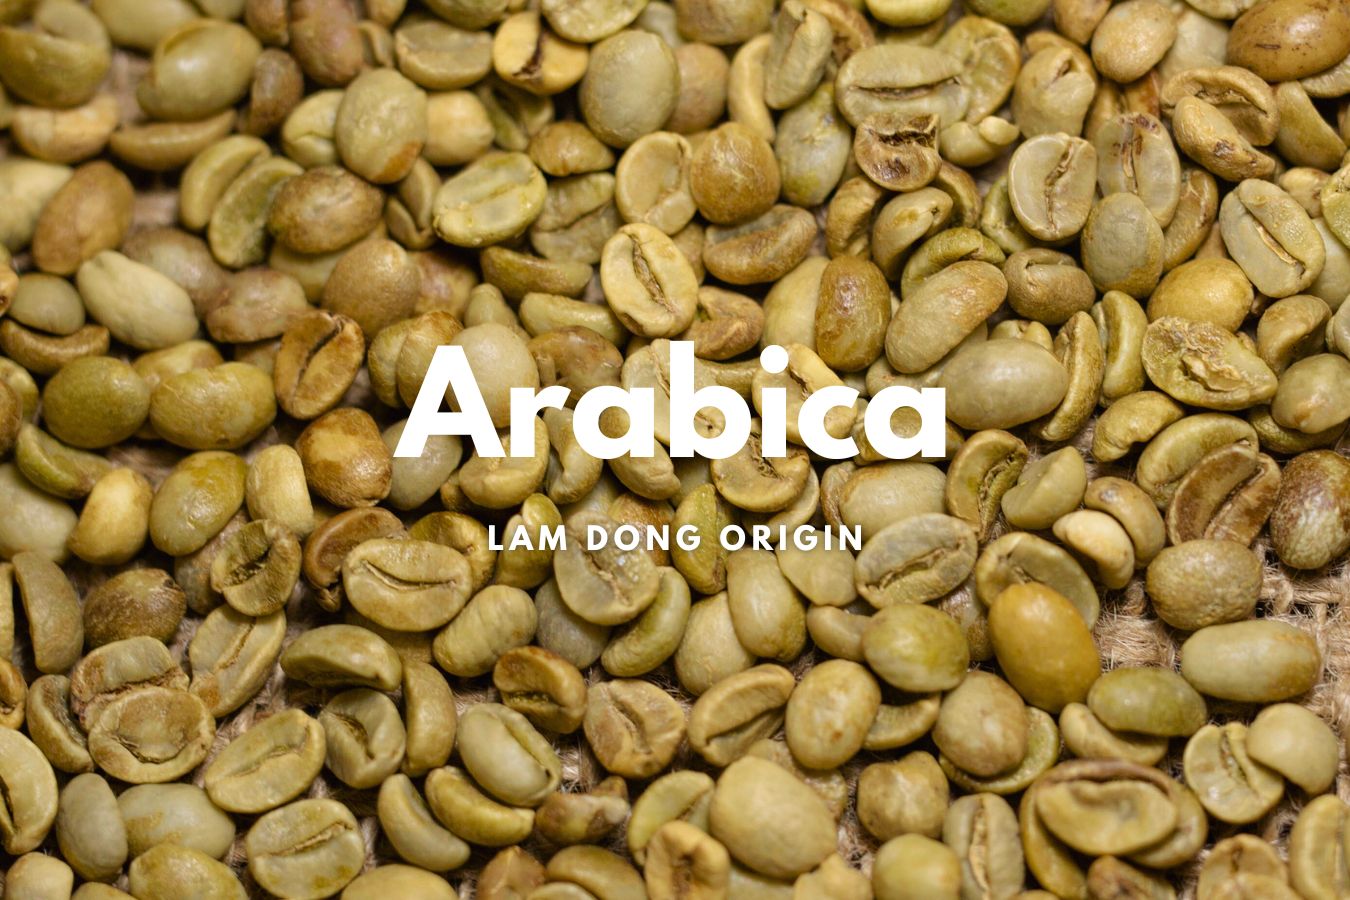 Arabica Coffee Supplier  Top Wholesale Suppliers of Premium Arabica Coffee Beans